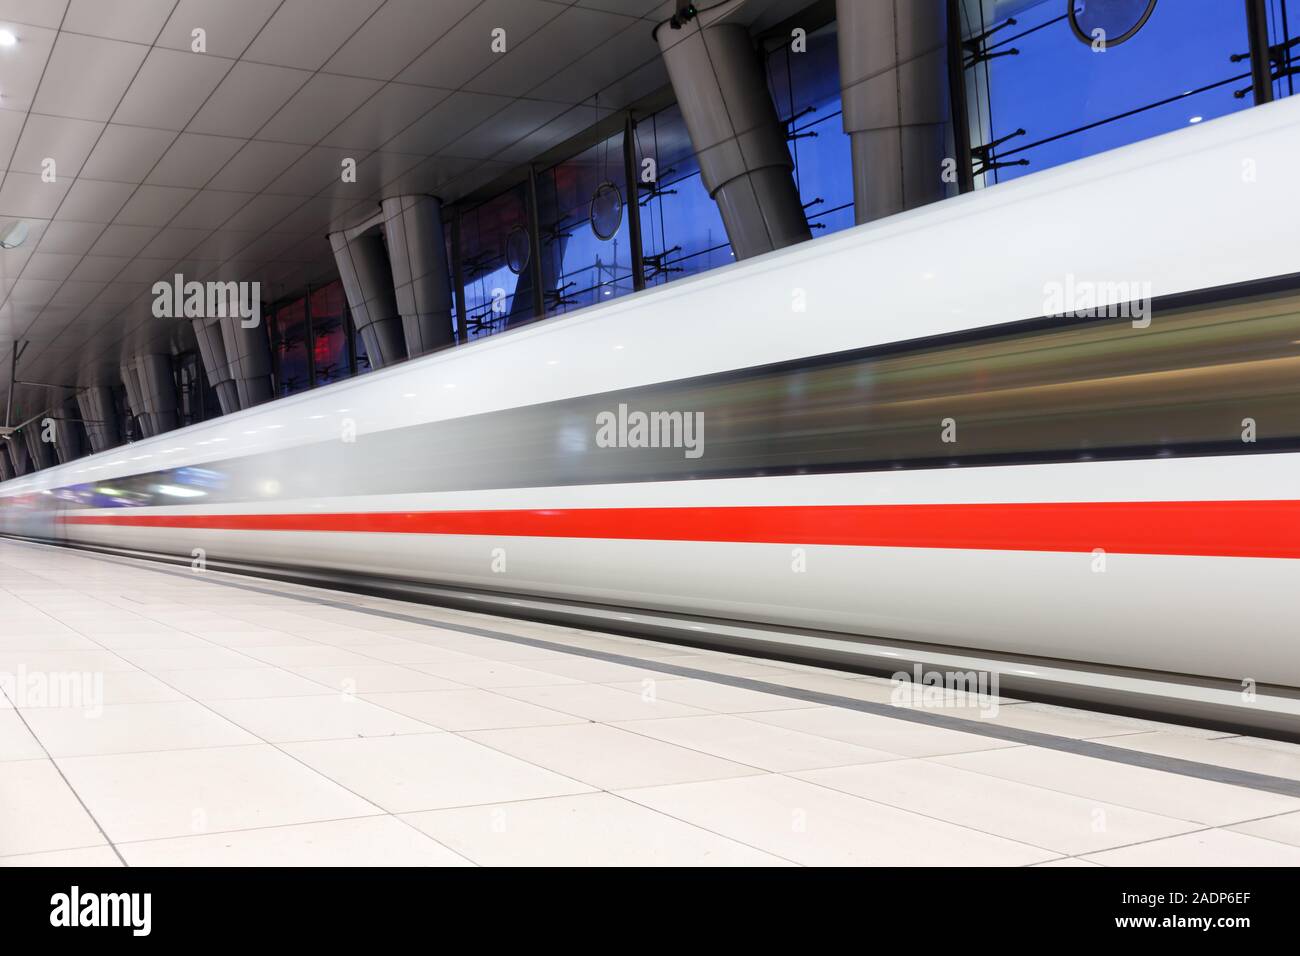 Frankfurt, Germany – November 20, 2019: ICE train at Frankfurt airport railway station (FRA) in Germany. Stock Photo